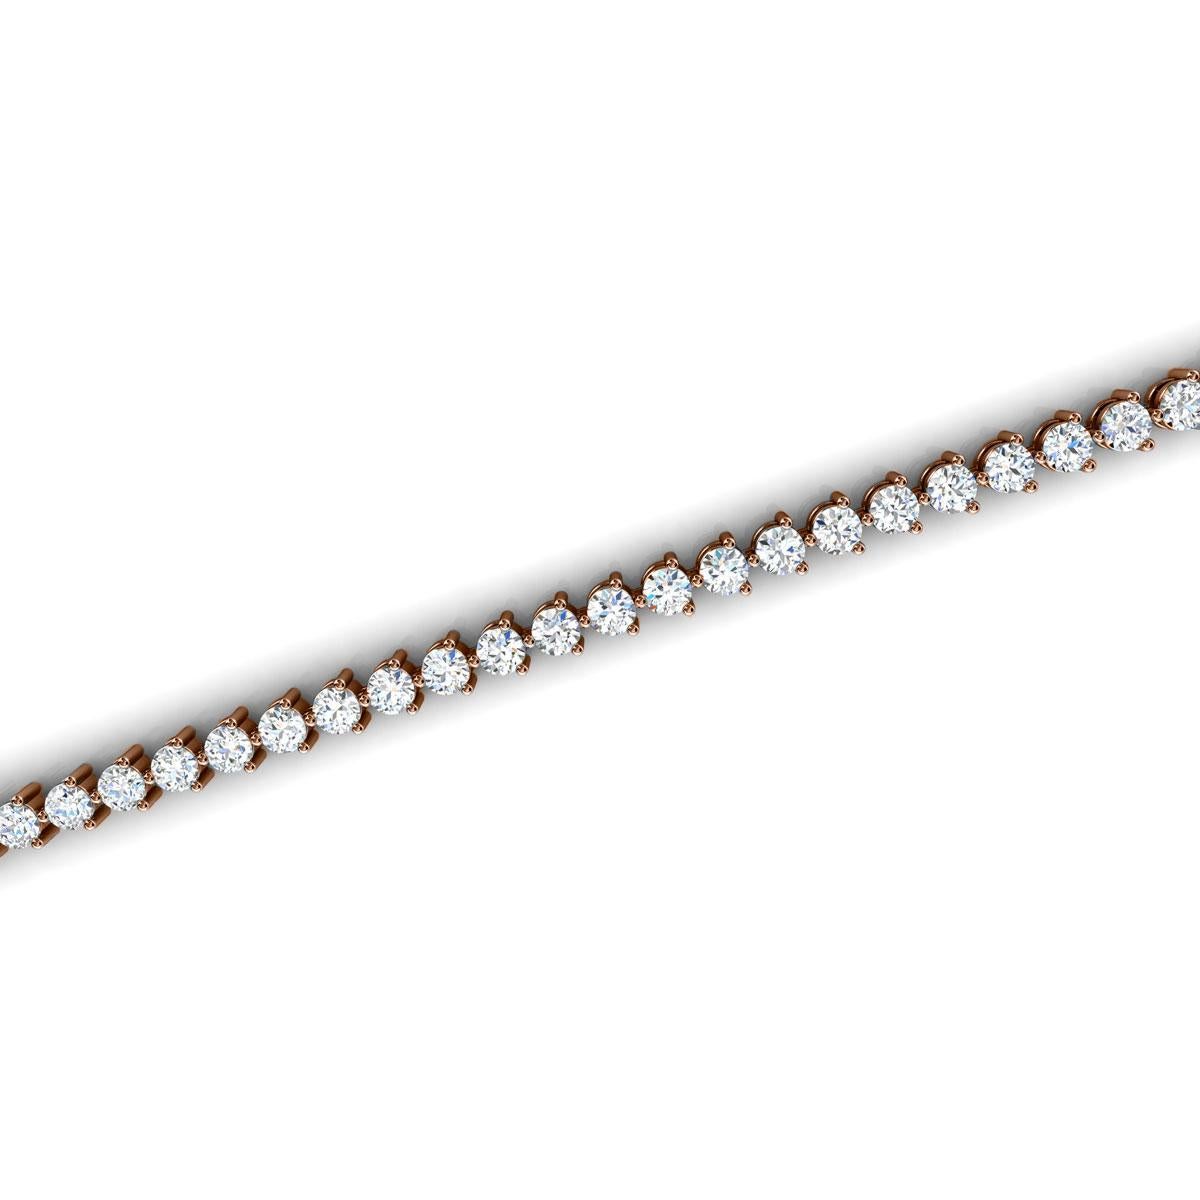 value of a 14 karat 3 carat diamond tennis bracelet